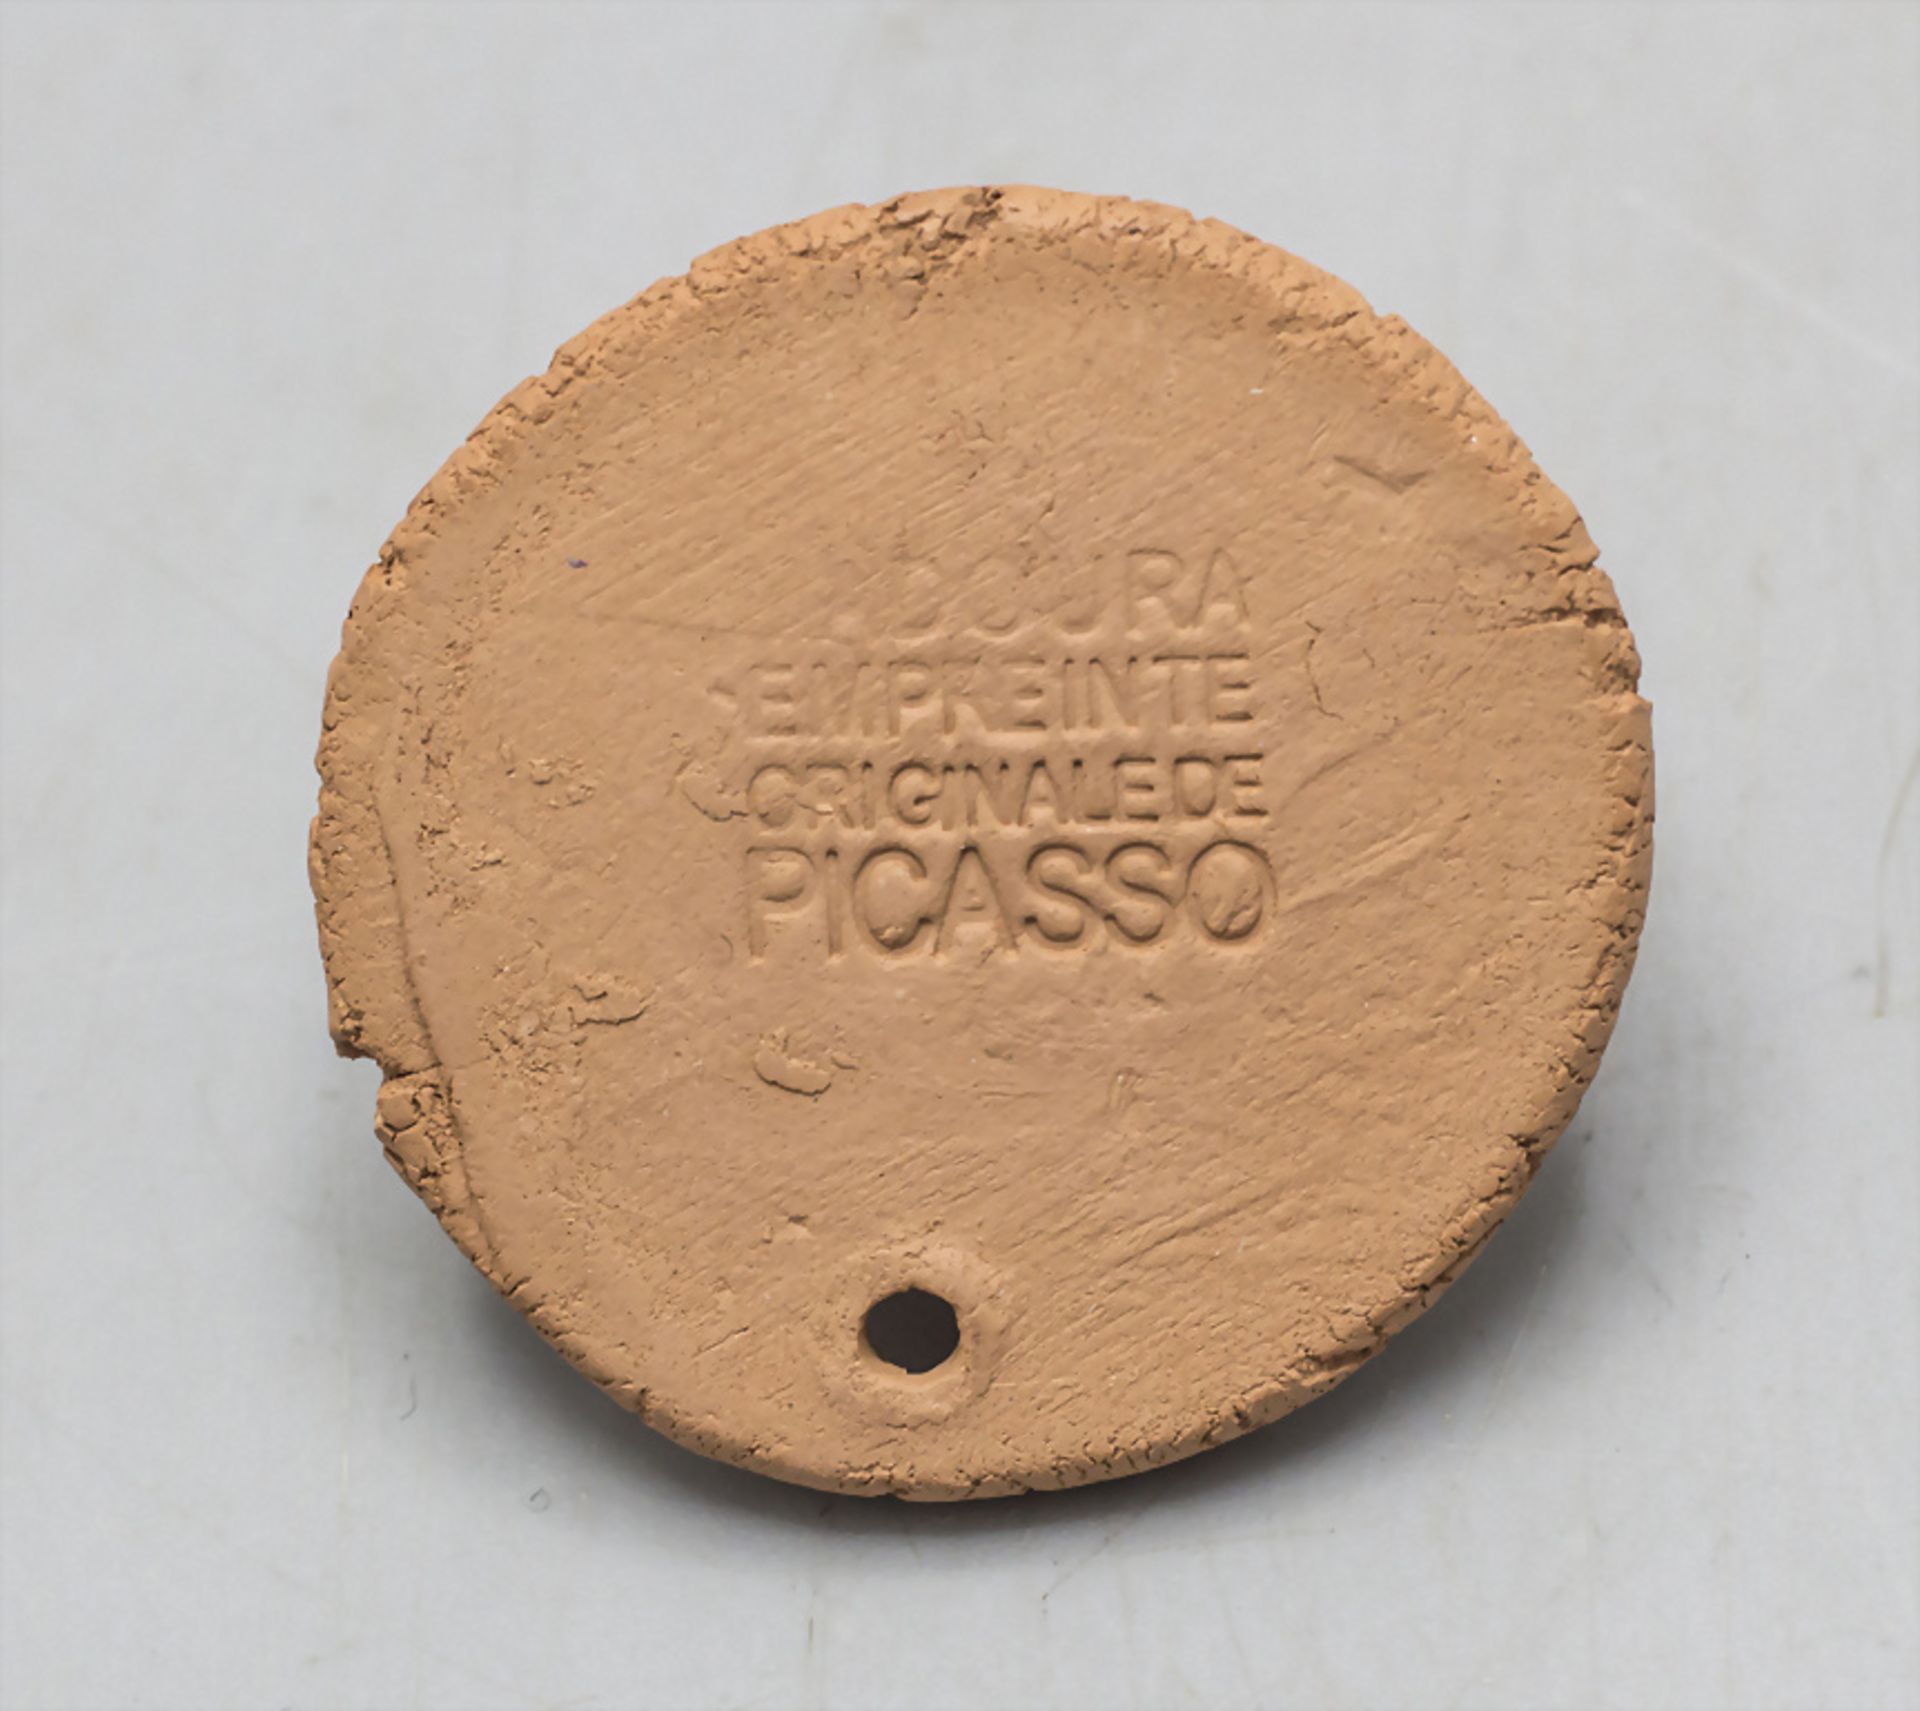 Pablo PICASSO (1881-1973), Keramikplakette 'Visage de femme' / A ceramic plaque 'Face of a ... - Image 2 of 2